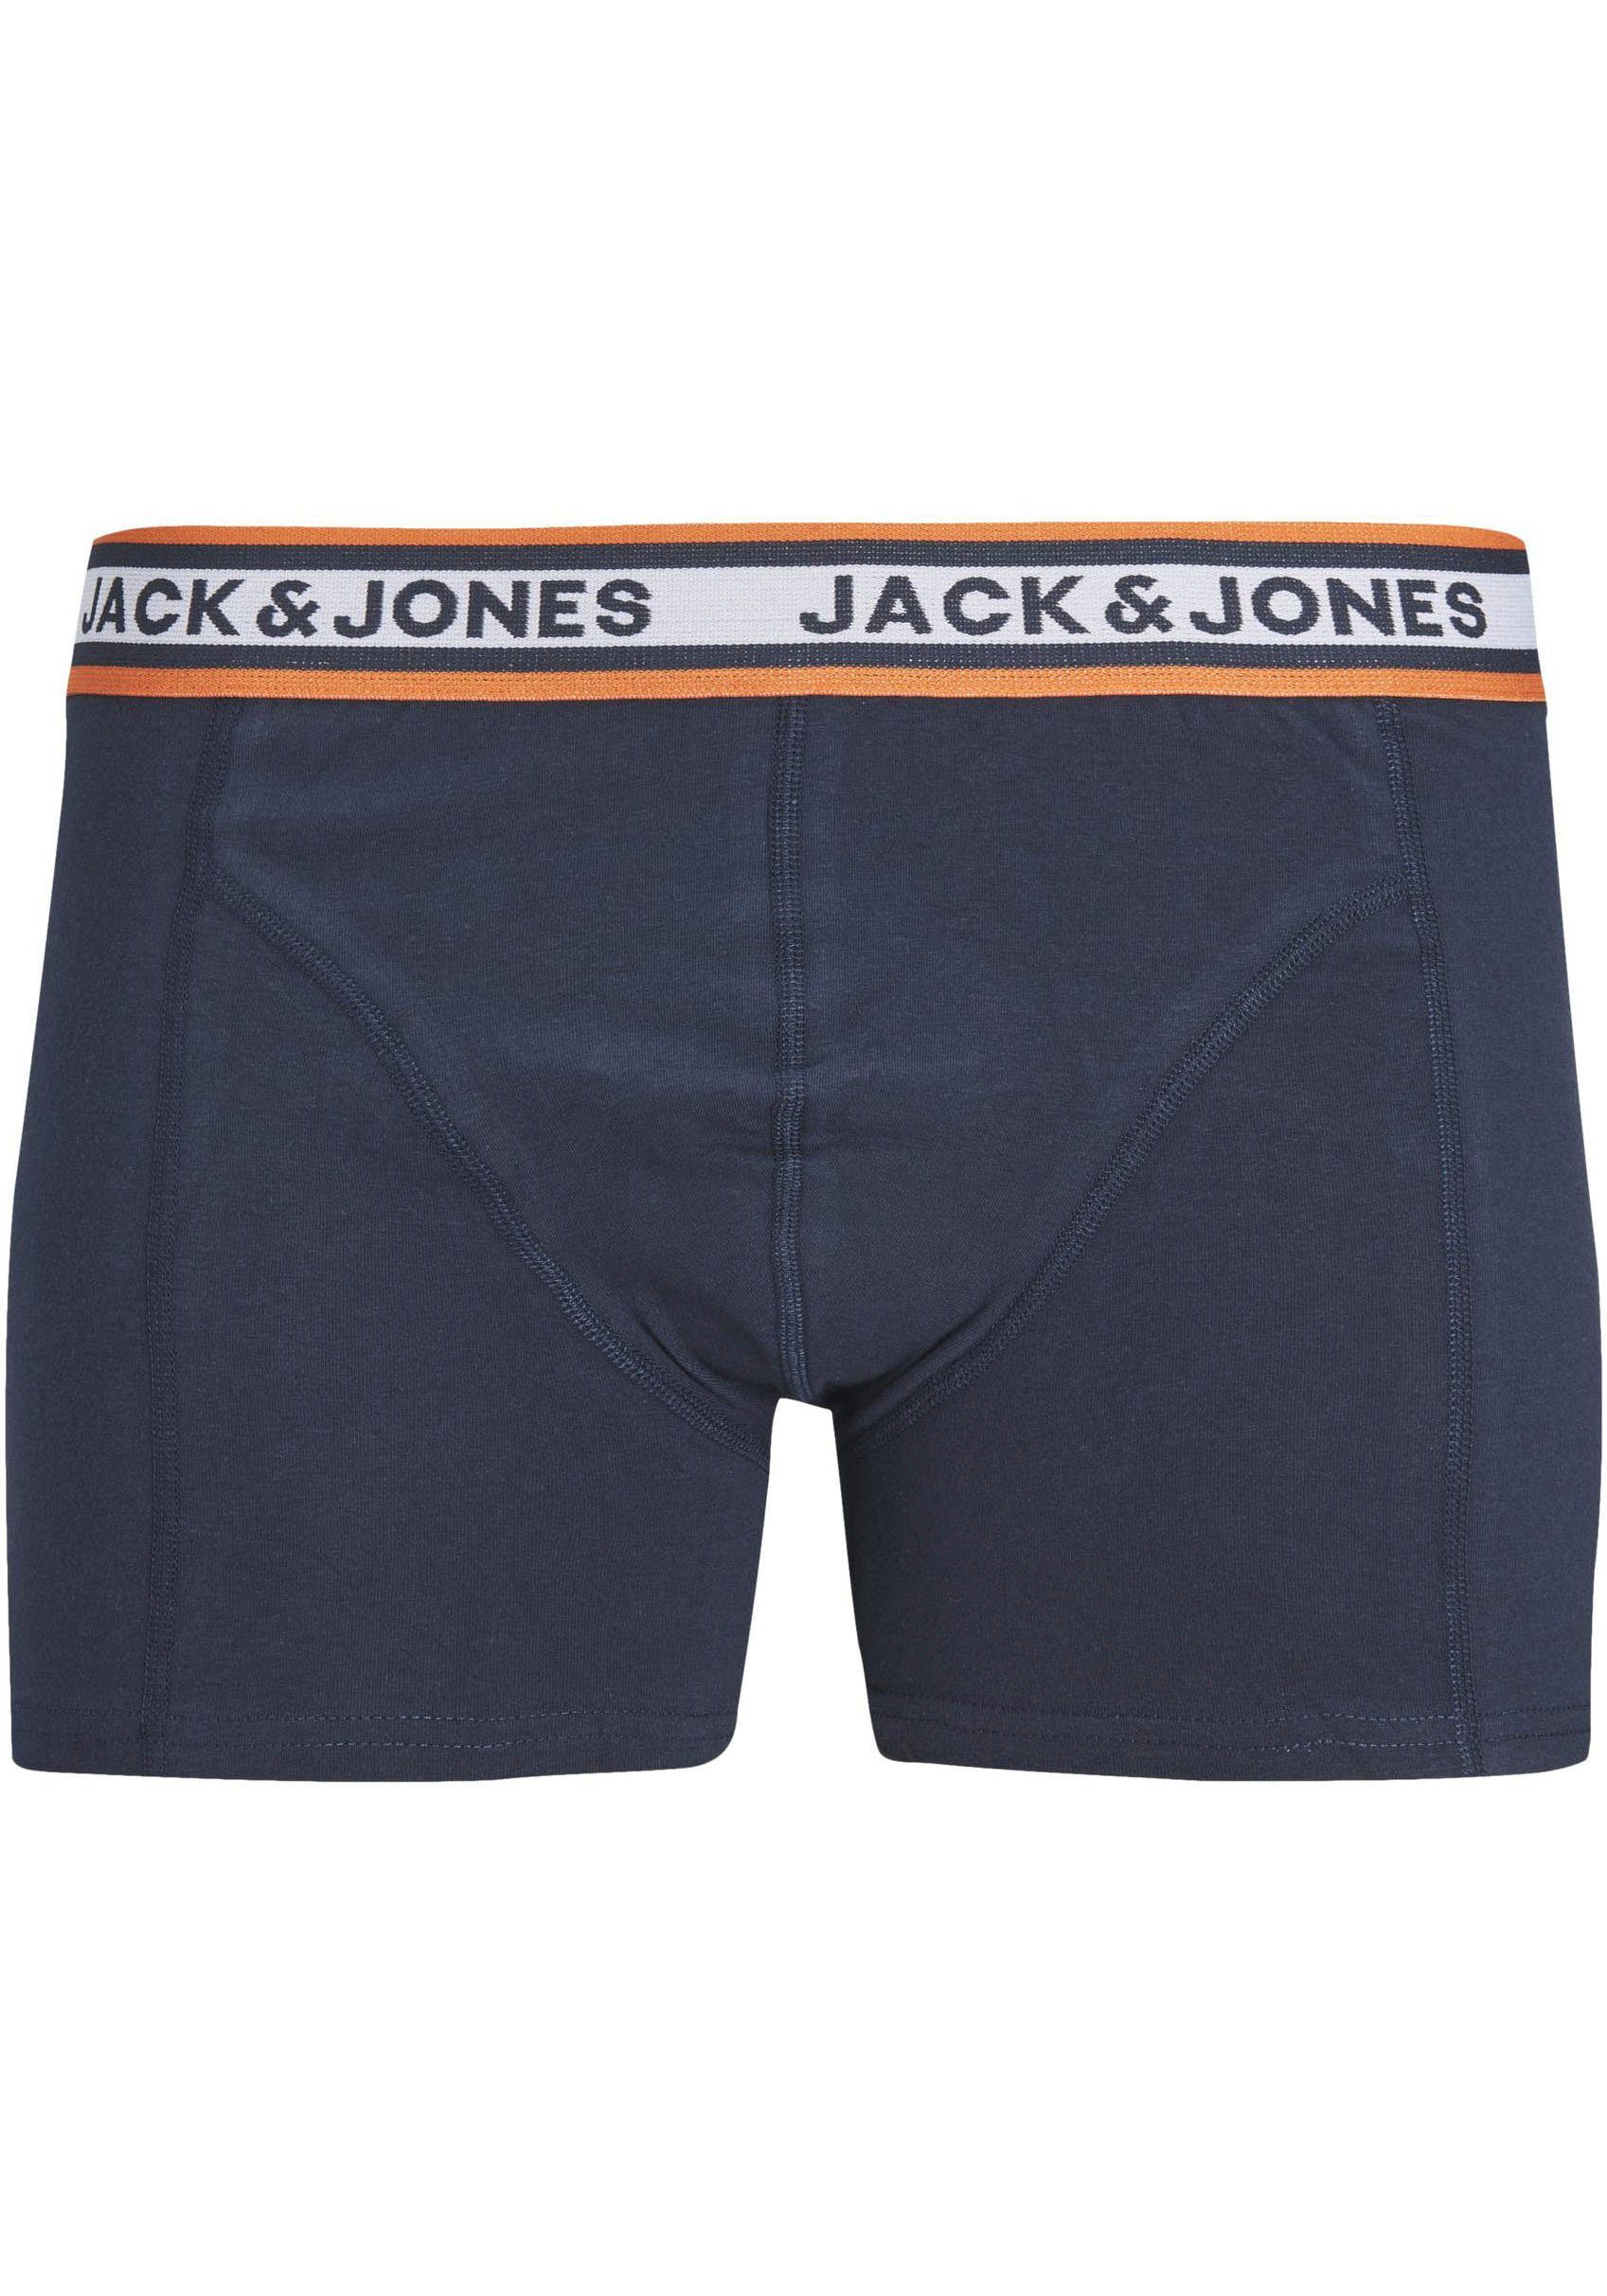 JACMYLE (Packung, / 3-St) Jones Jack & blazer NOOS 3 / exub Trunk PACK TRUNKS navy dgm